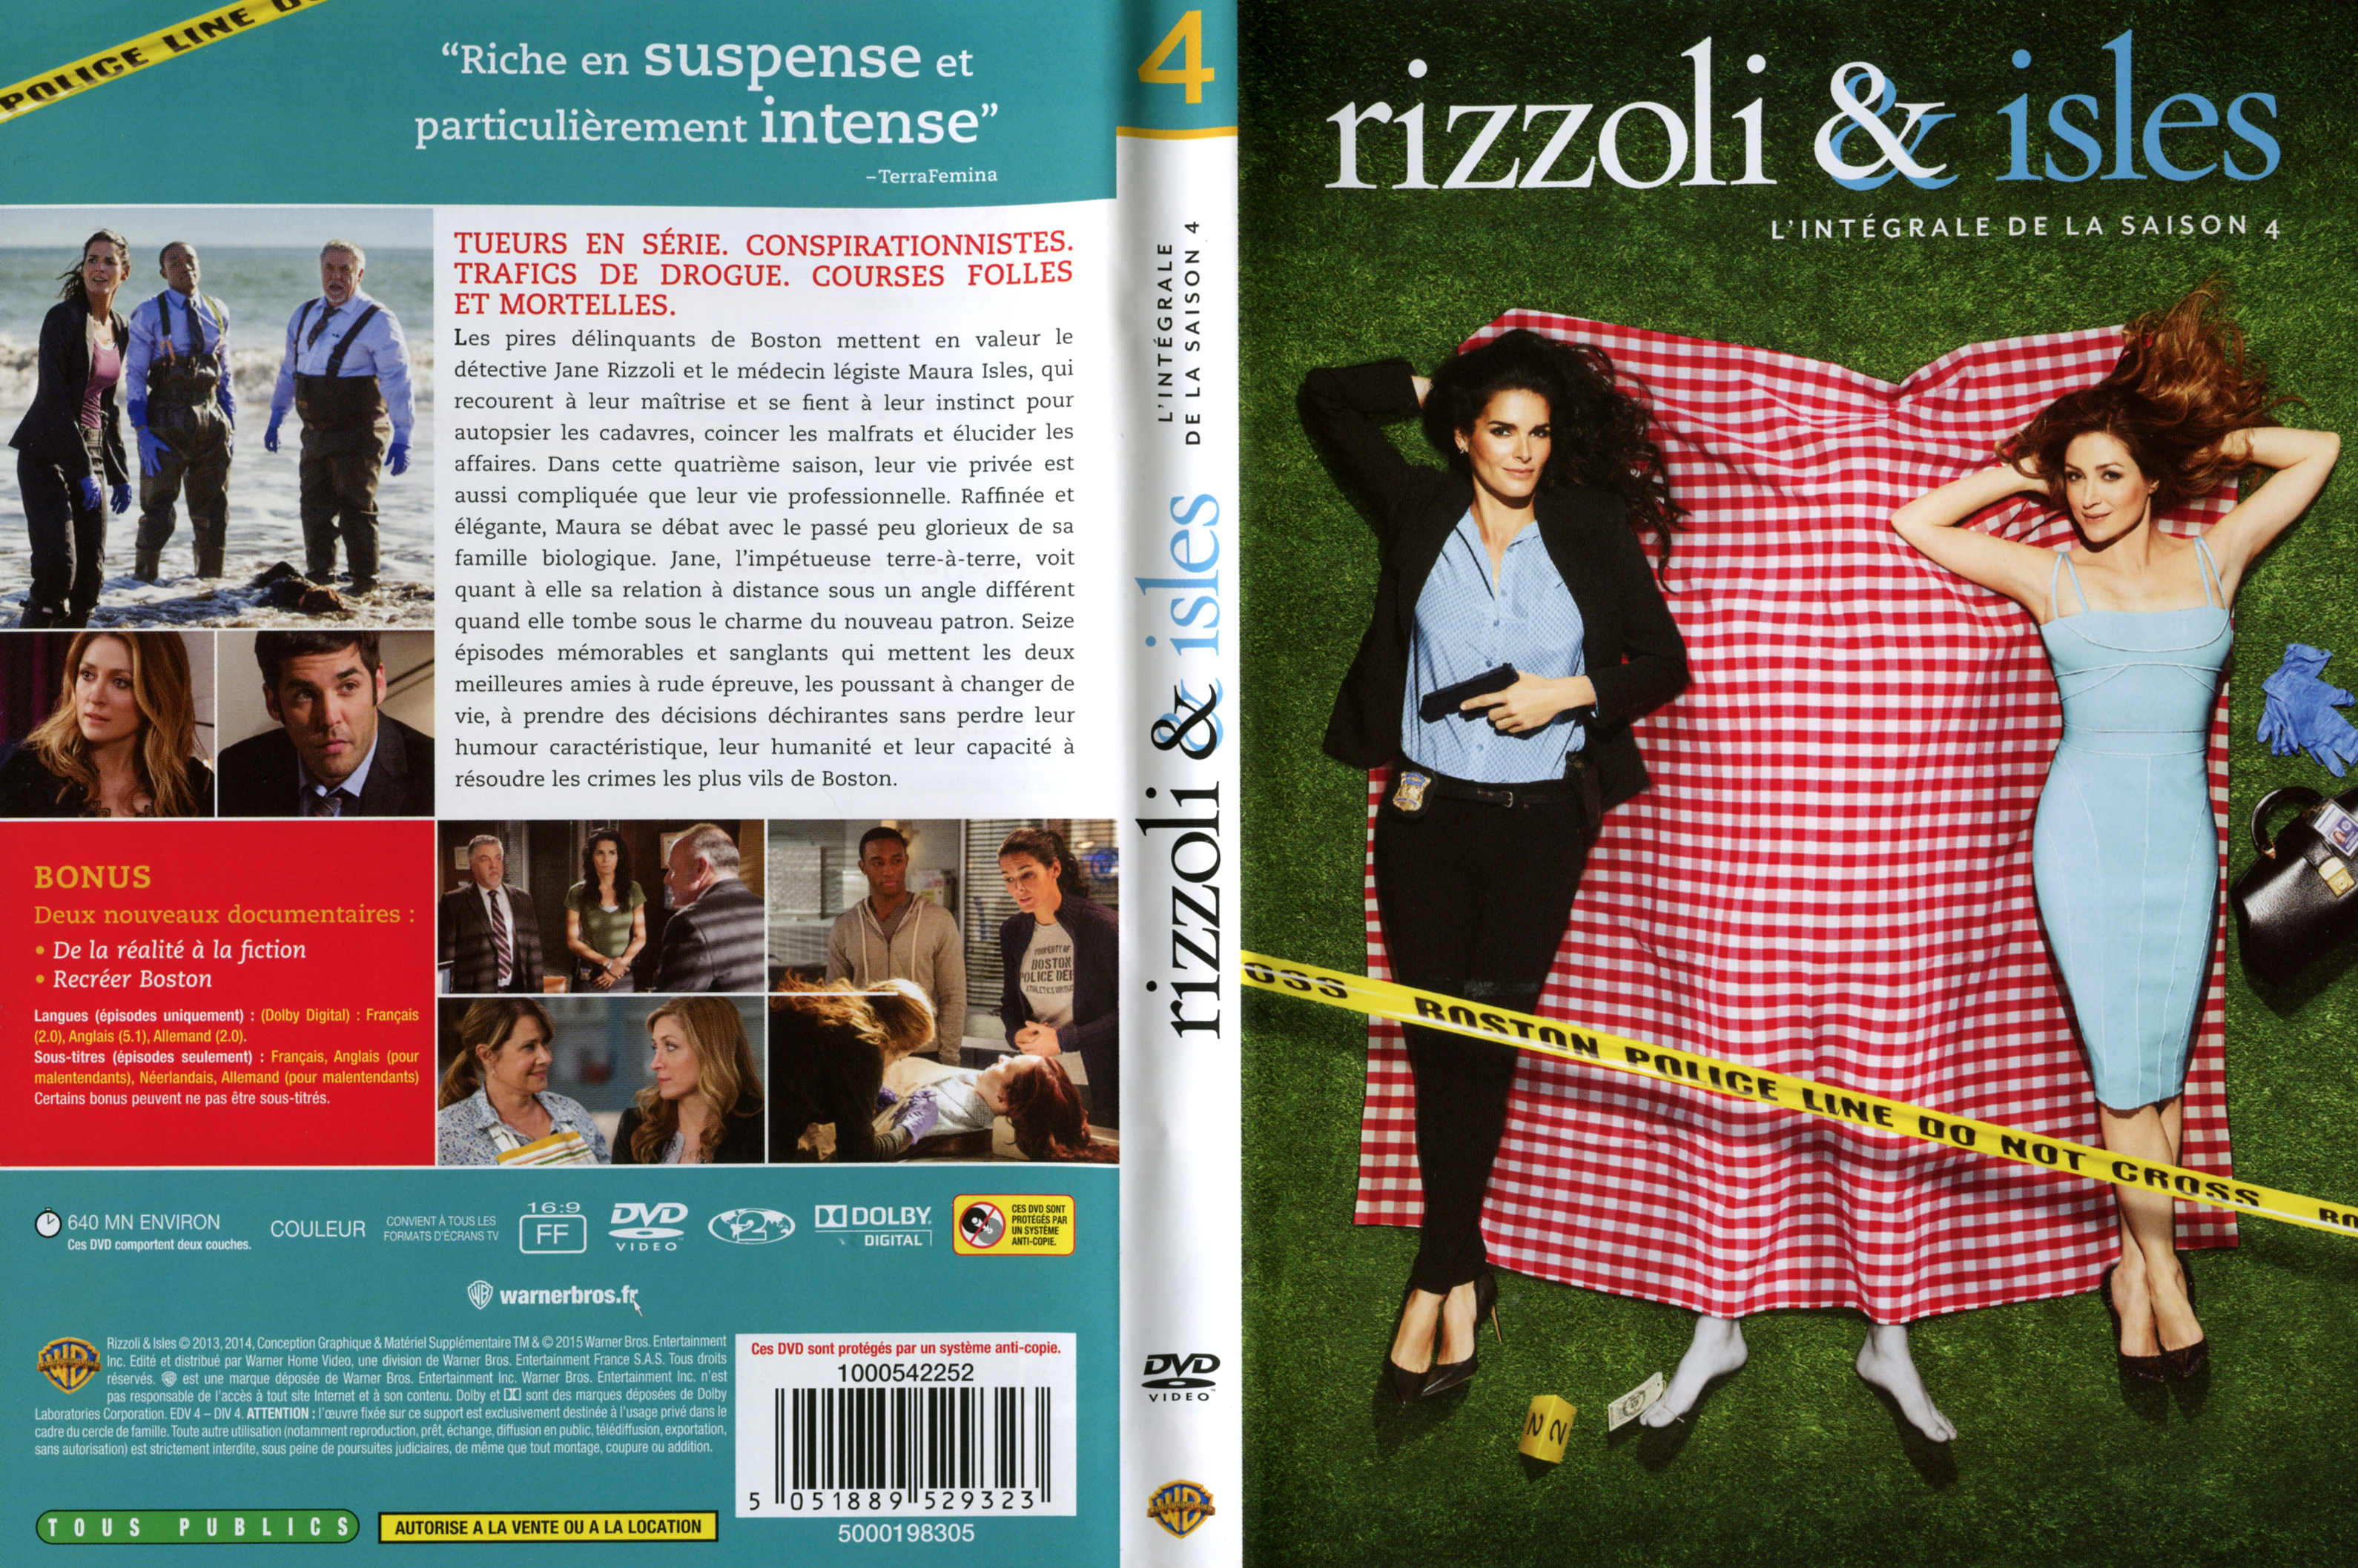 Jaquette DVD Rizzoli & Isles Saison 4